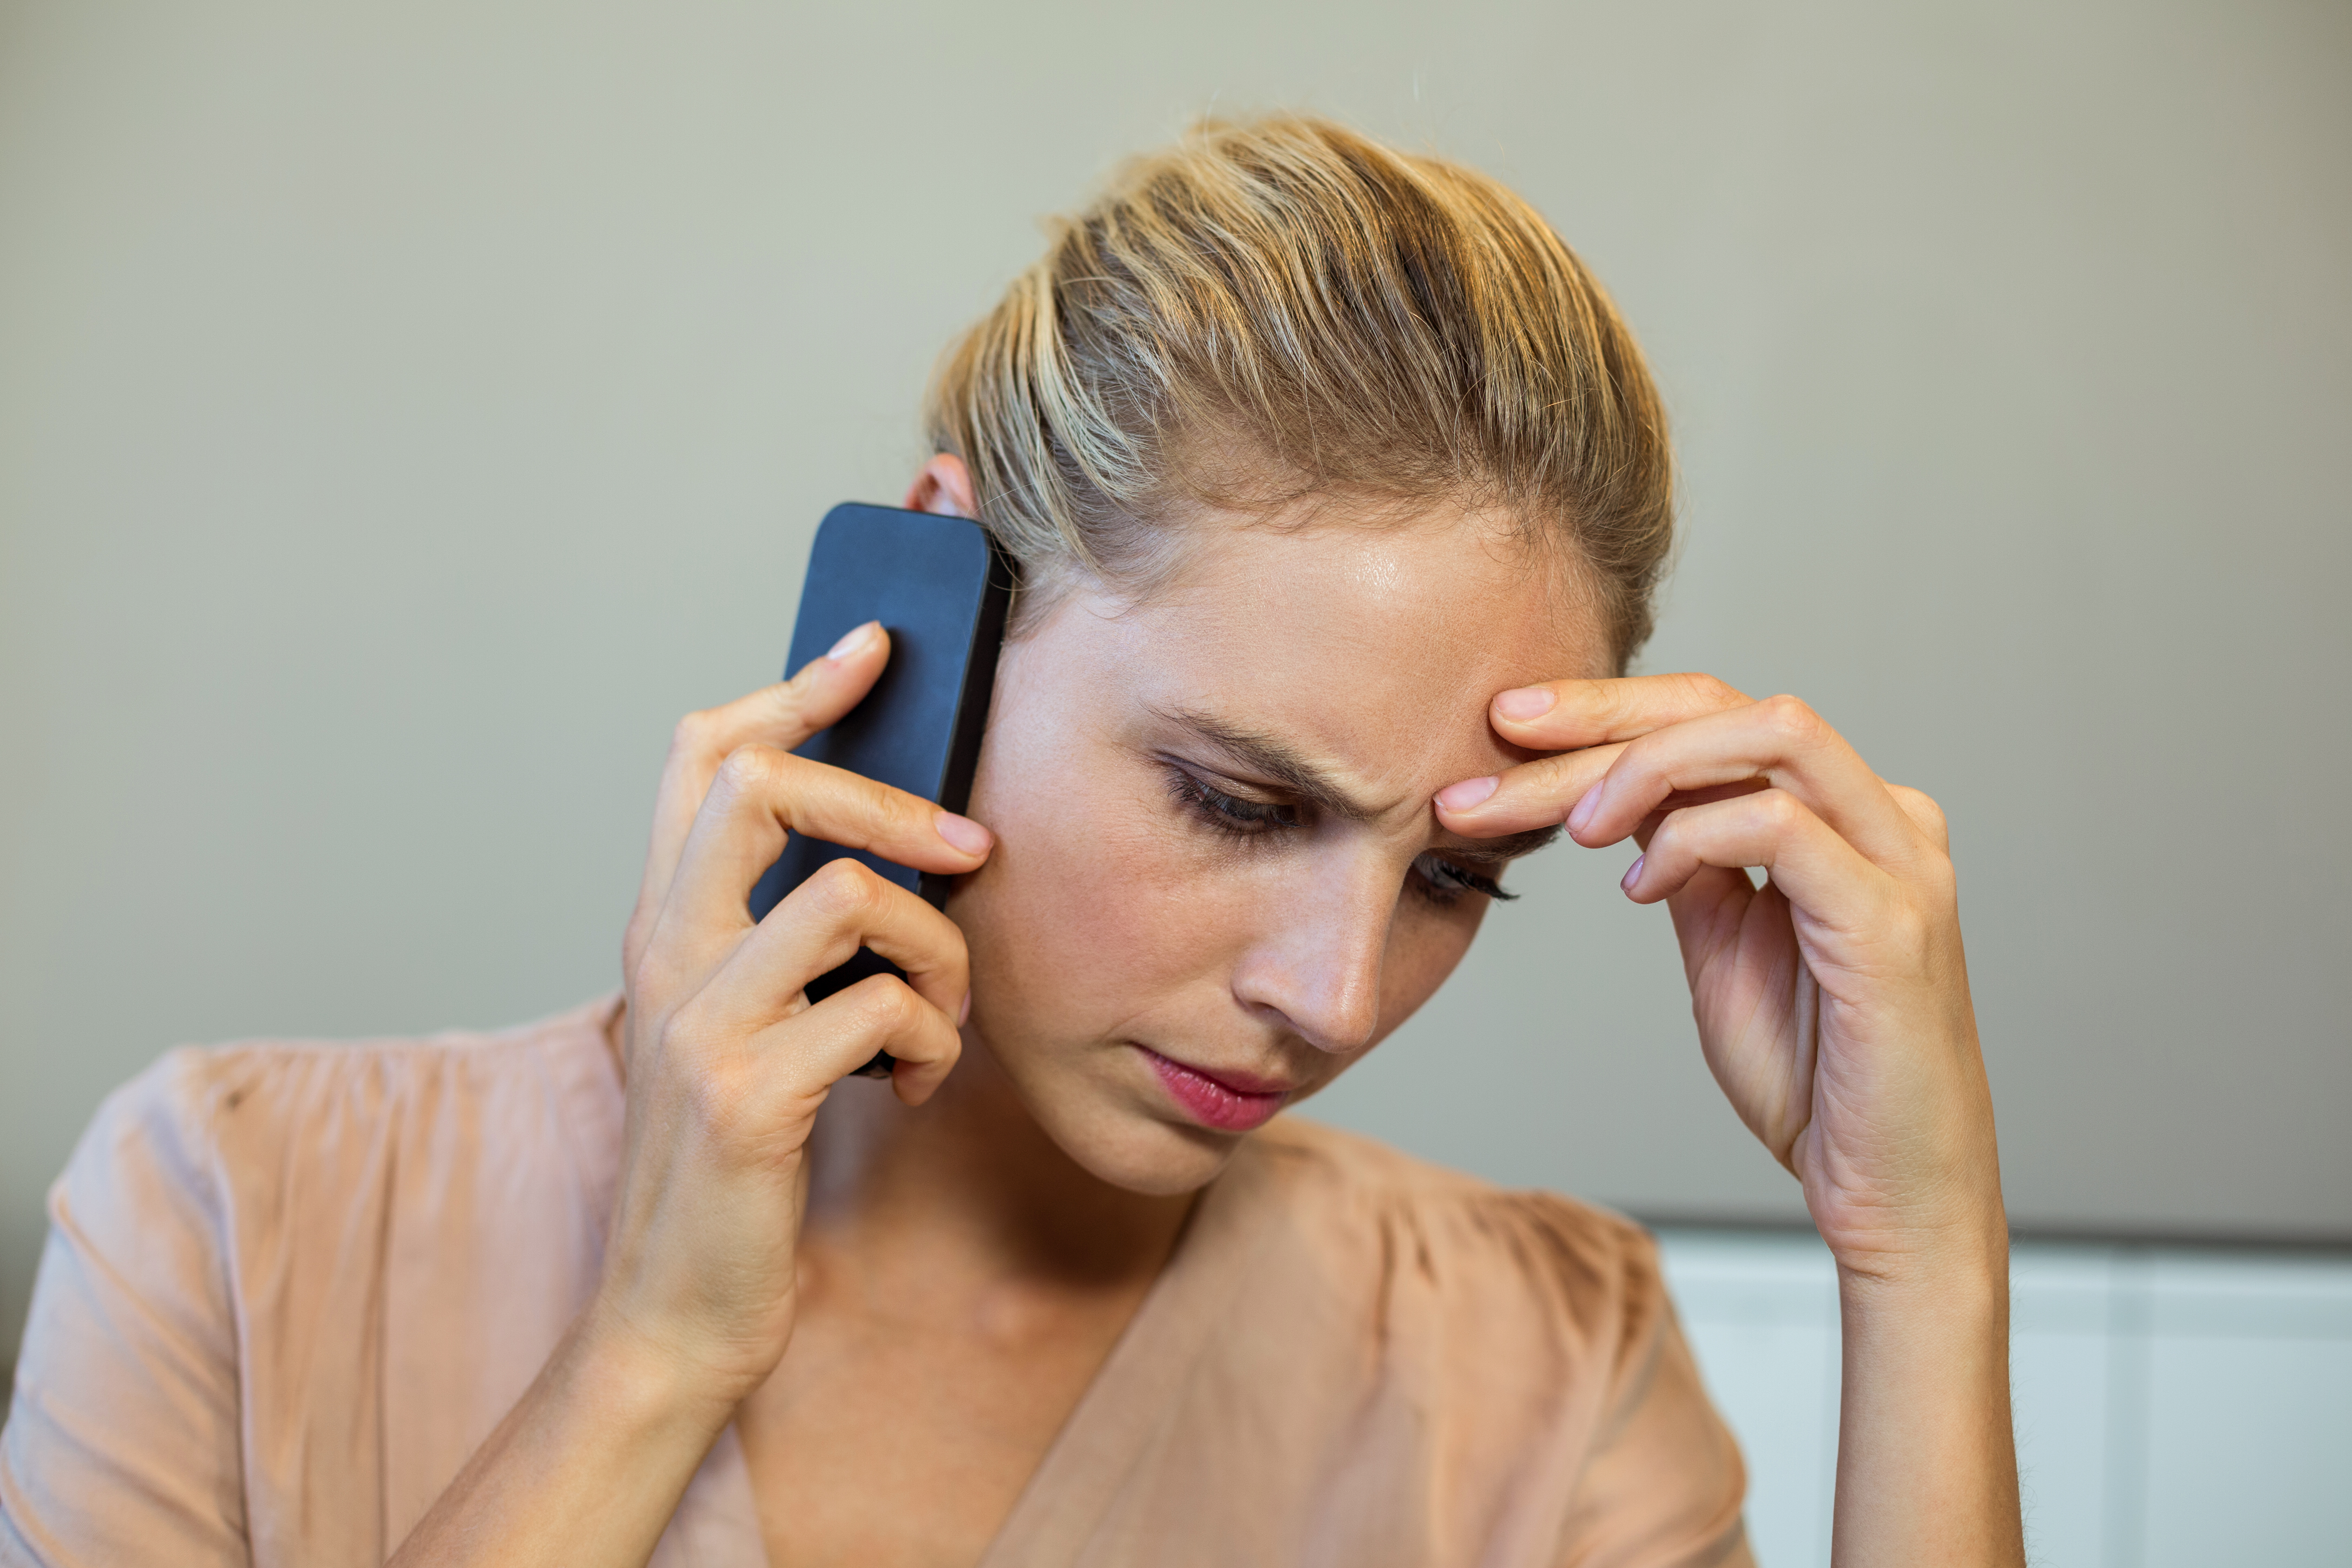 Una mujer alterada al teléfono | Fuente: Shutterstock